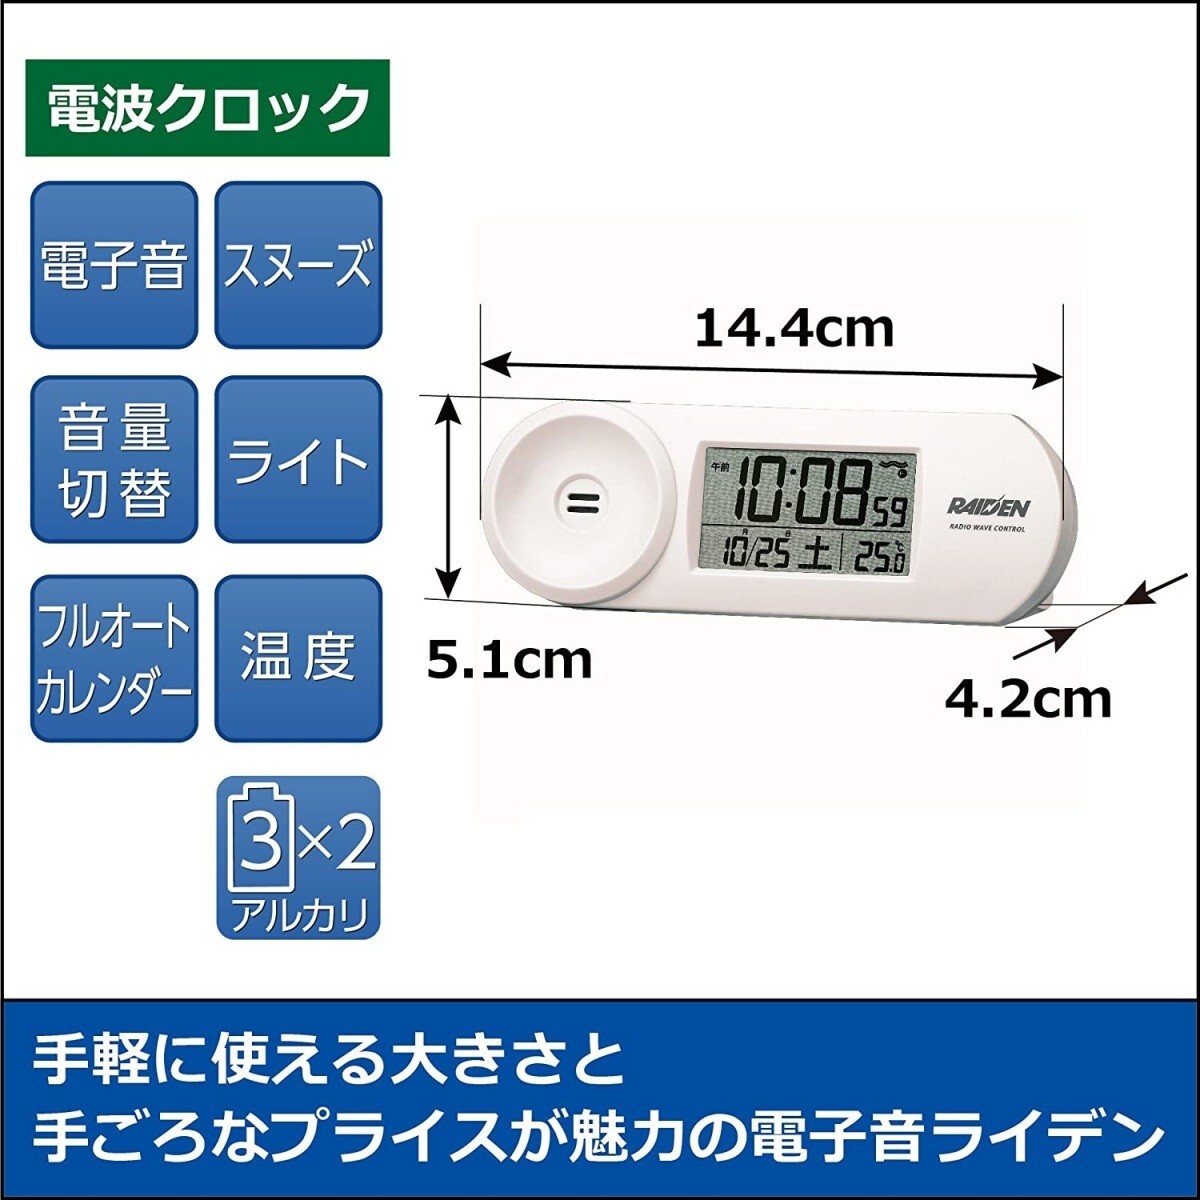 SEIKO セイコー大音量電子音アラーム 電波目覚時計 RAIDEN ライデン NR532W 新品です。_画像2